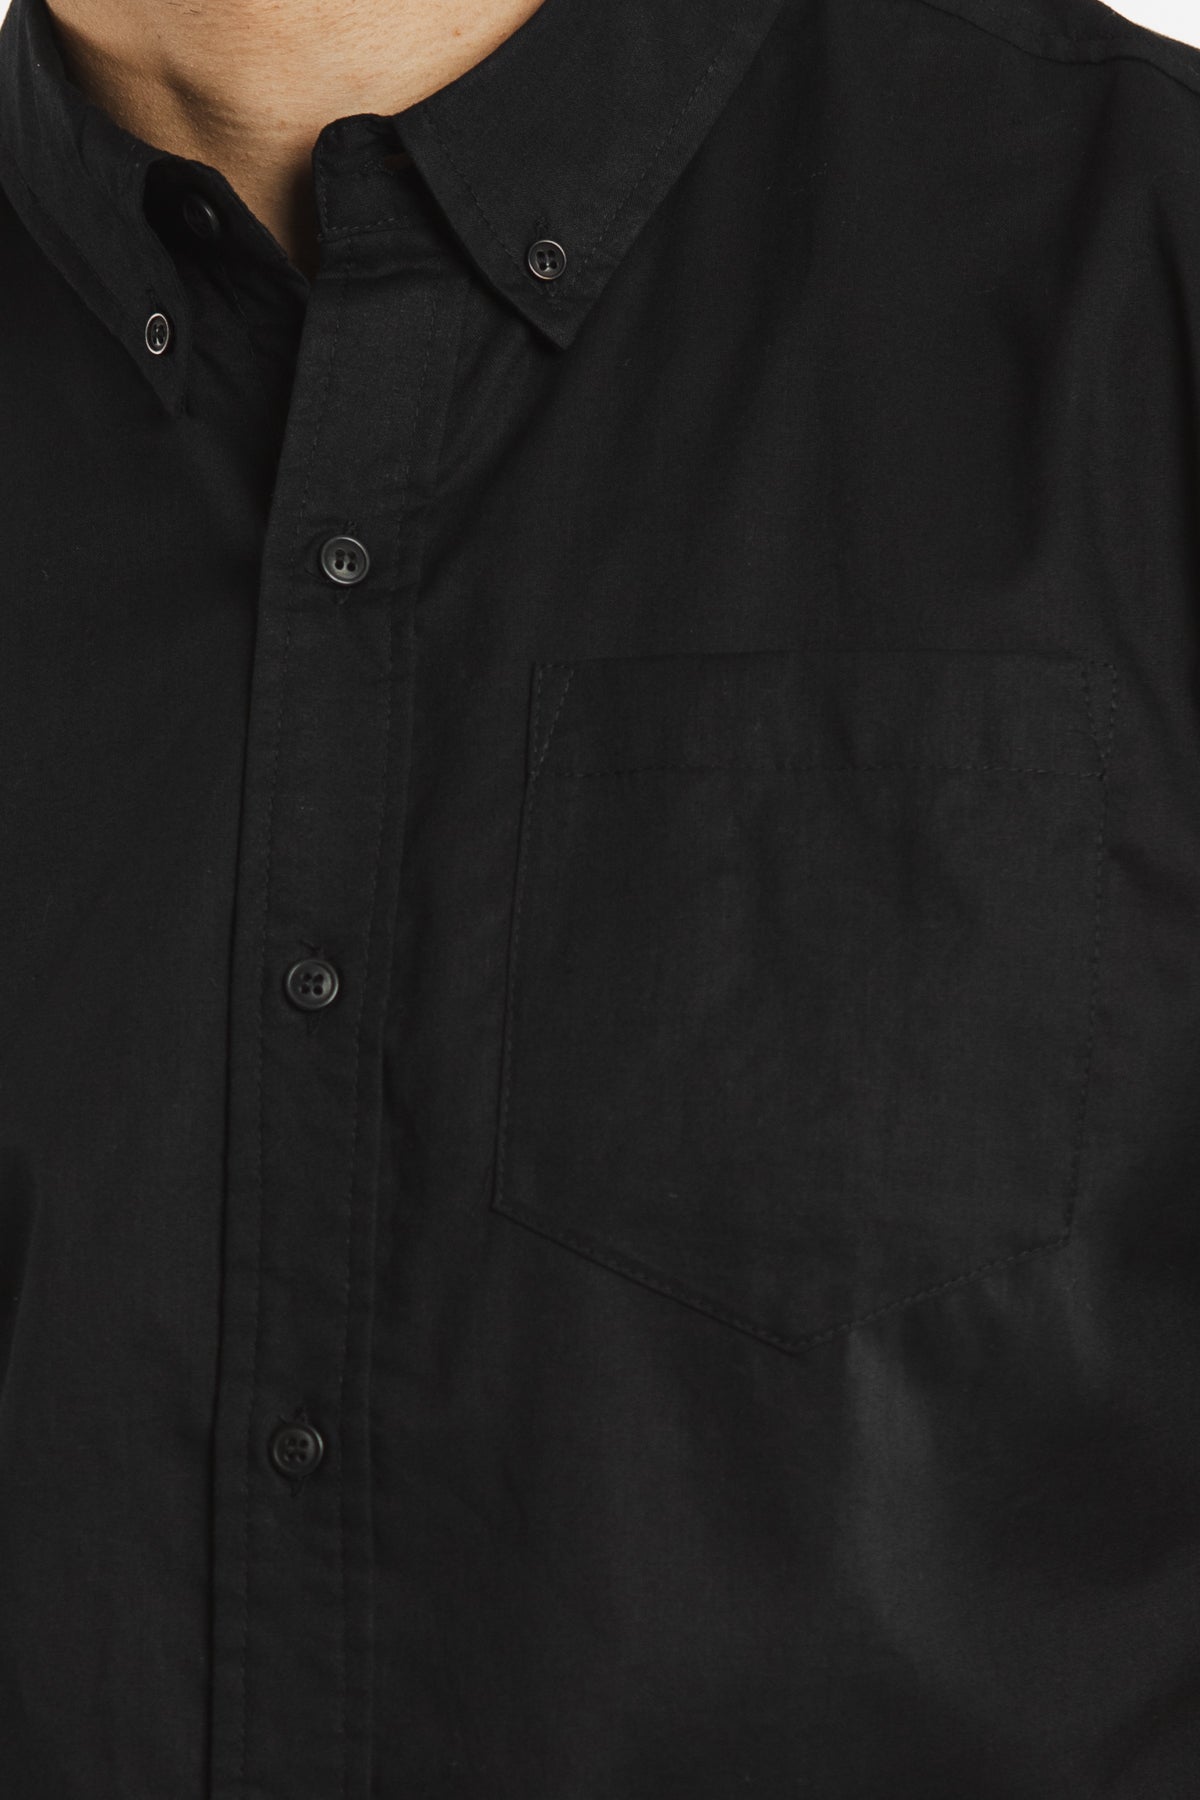 Jordan Slim Shirt / Black